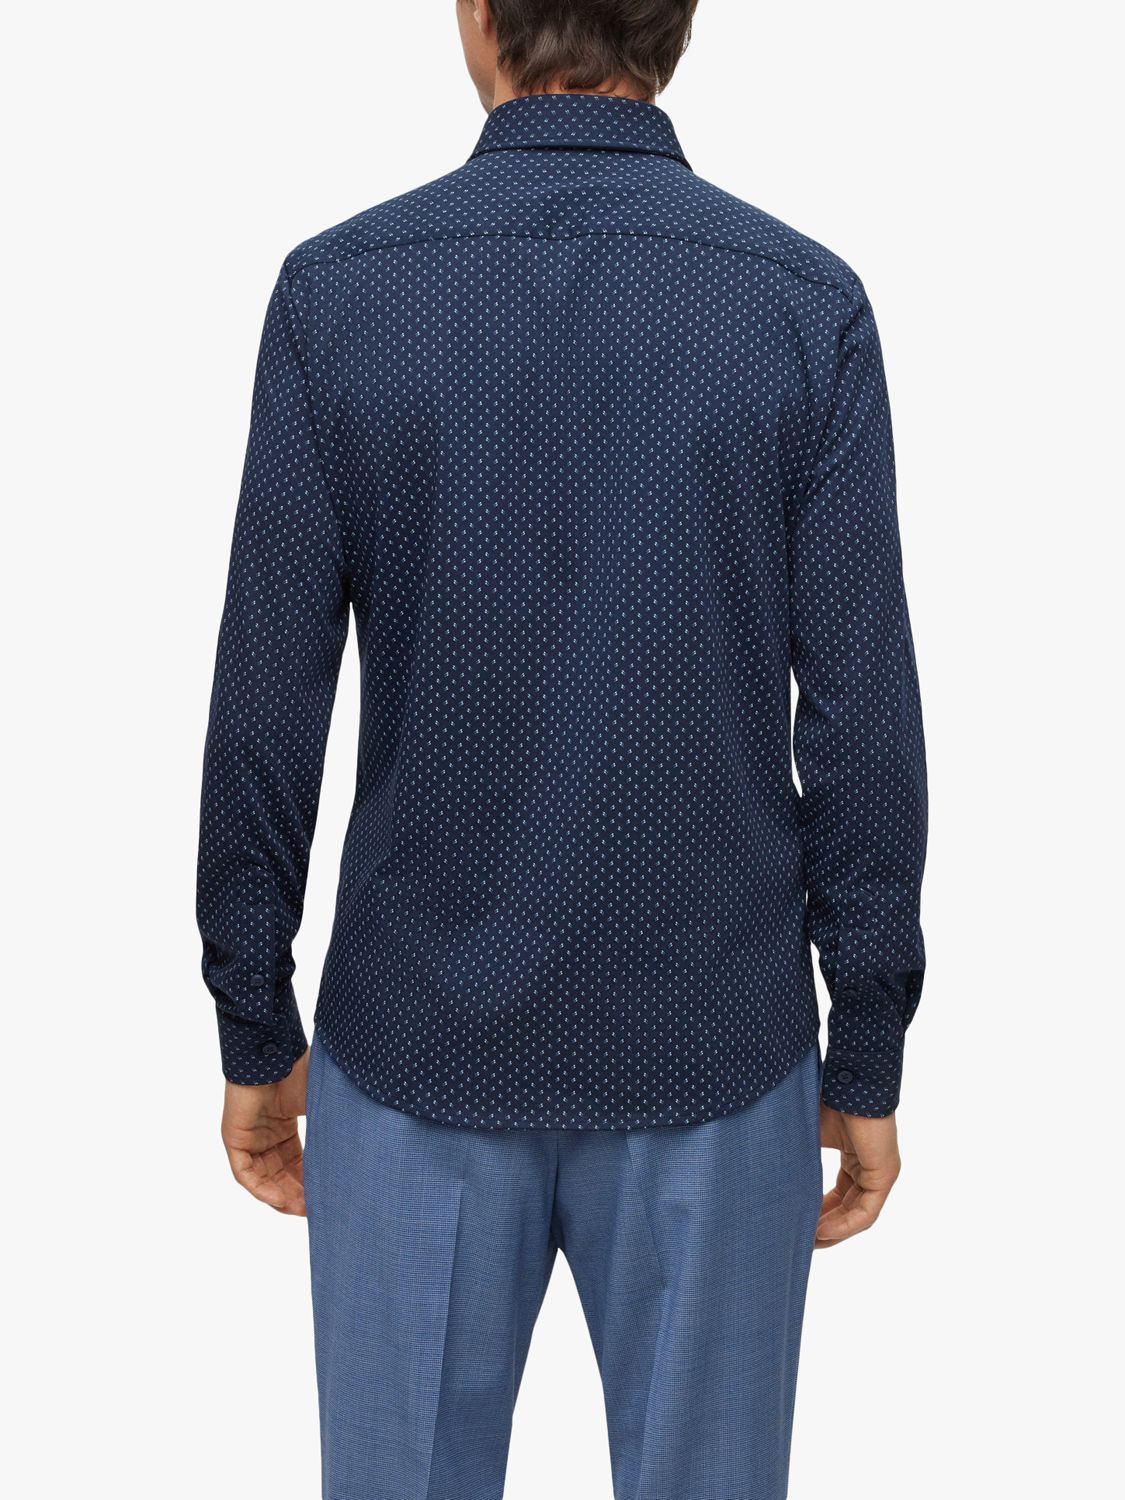 BOSS Roan Kent Oxford Slim Fit Shirt, Blue/White